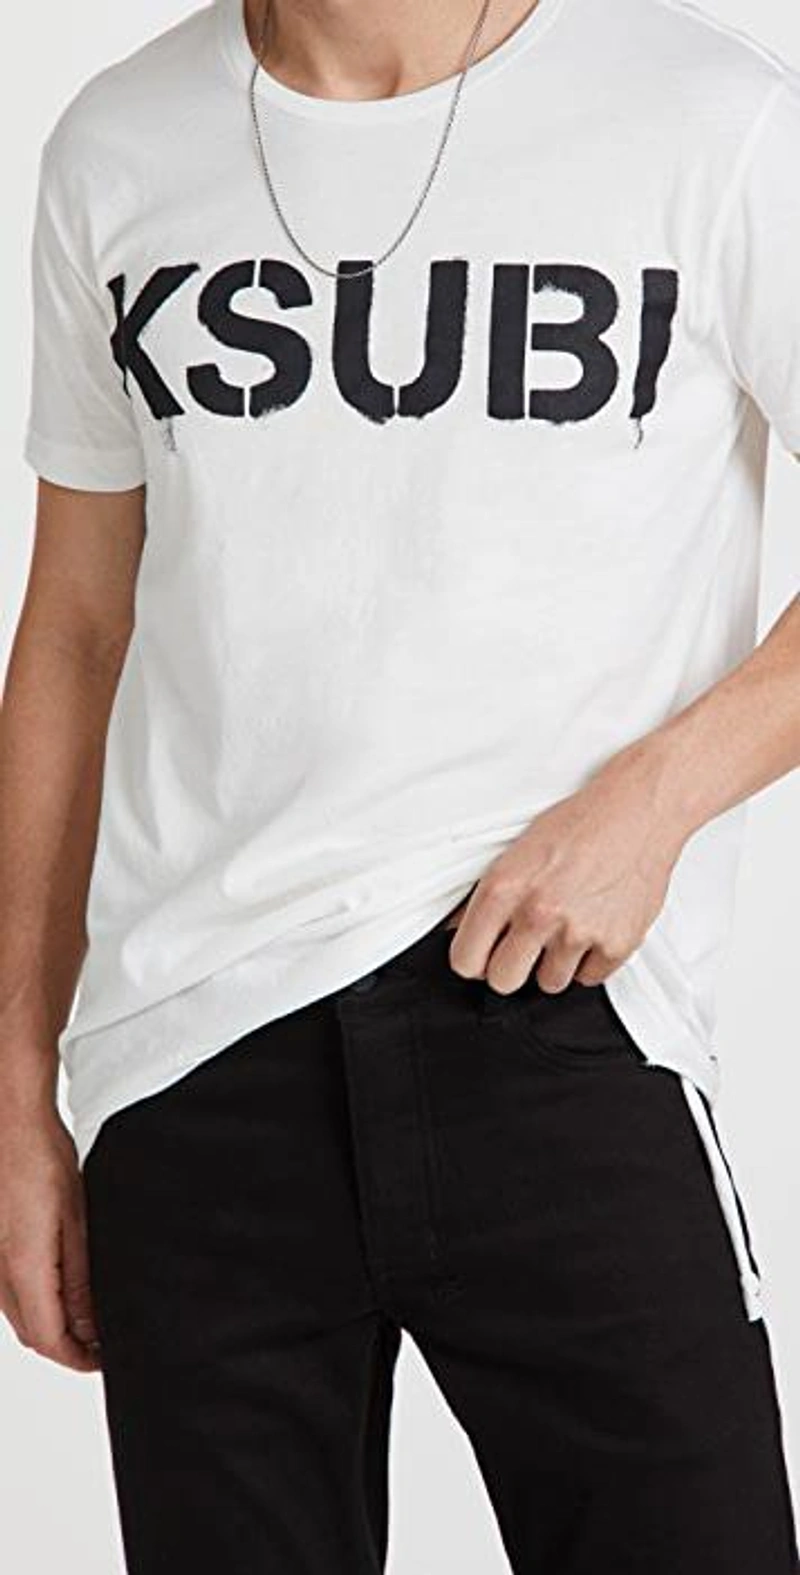 shopbop.com's Posts | 搭配: Ksubi Stencil Seeing Lines Tee White；Ksubi Hazlow Ace Black Jeans